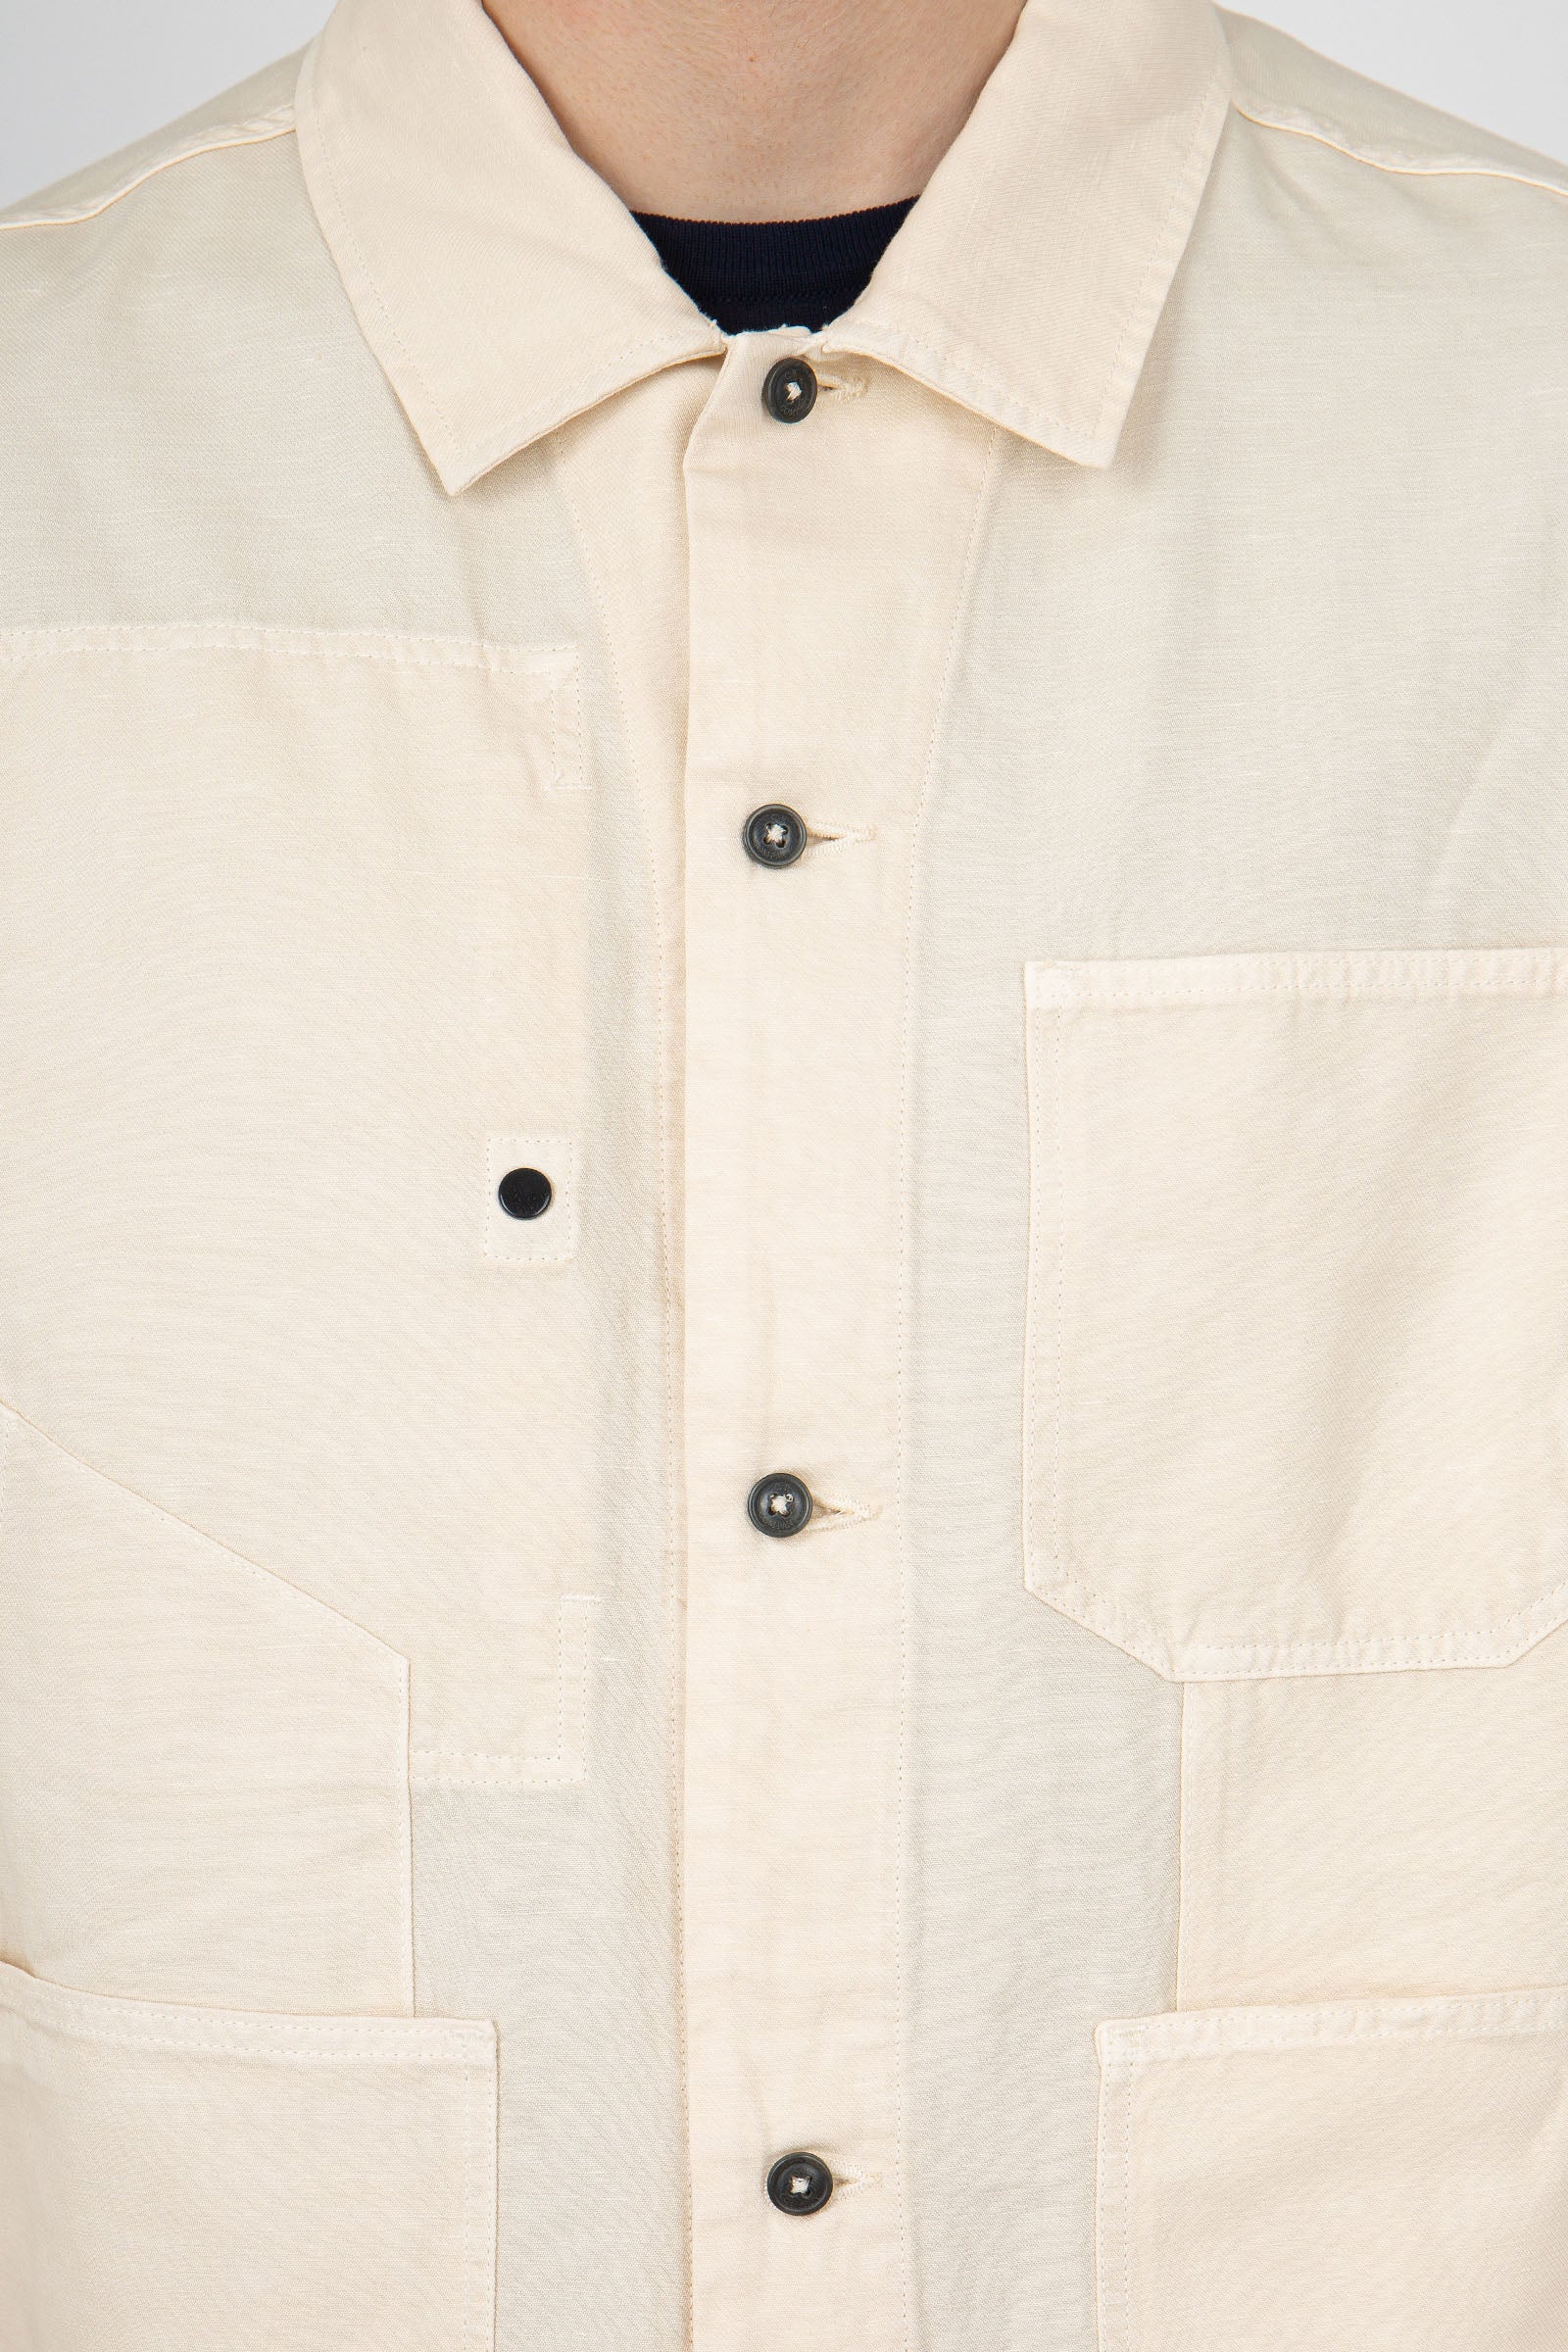 C.P. Company Overshirt Cotton/Linen Cream - 6